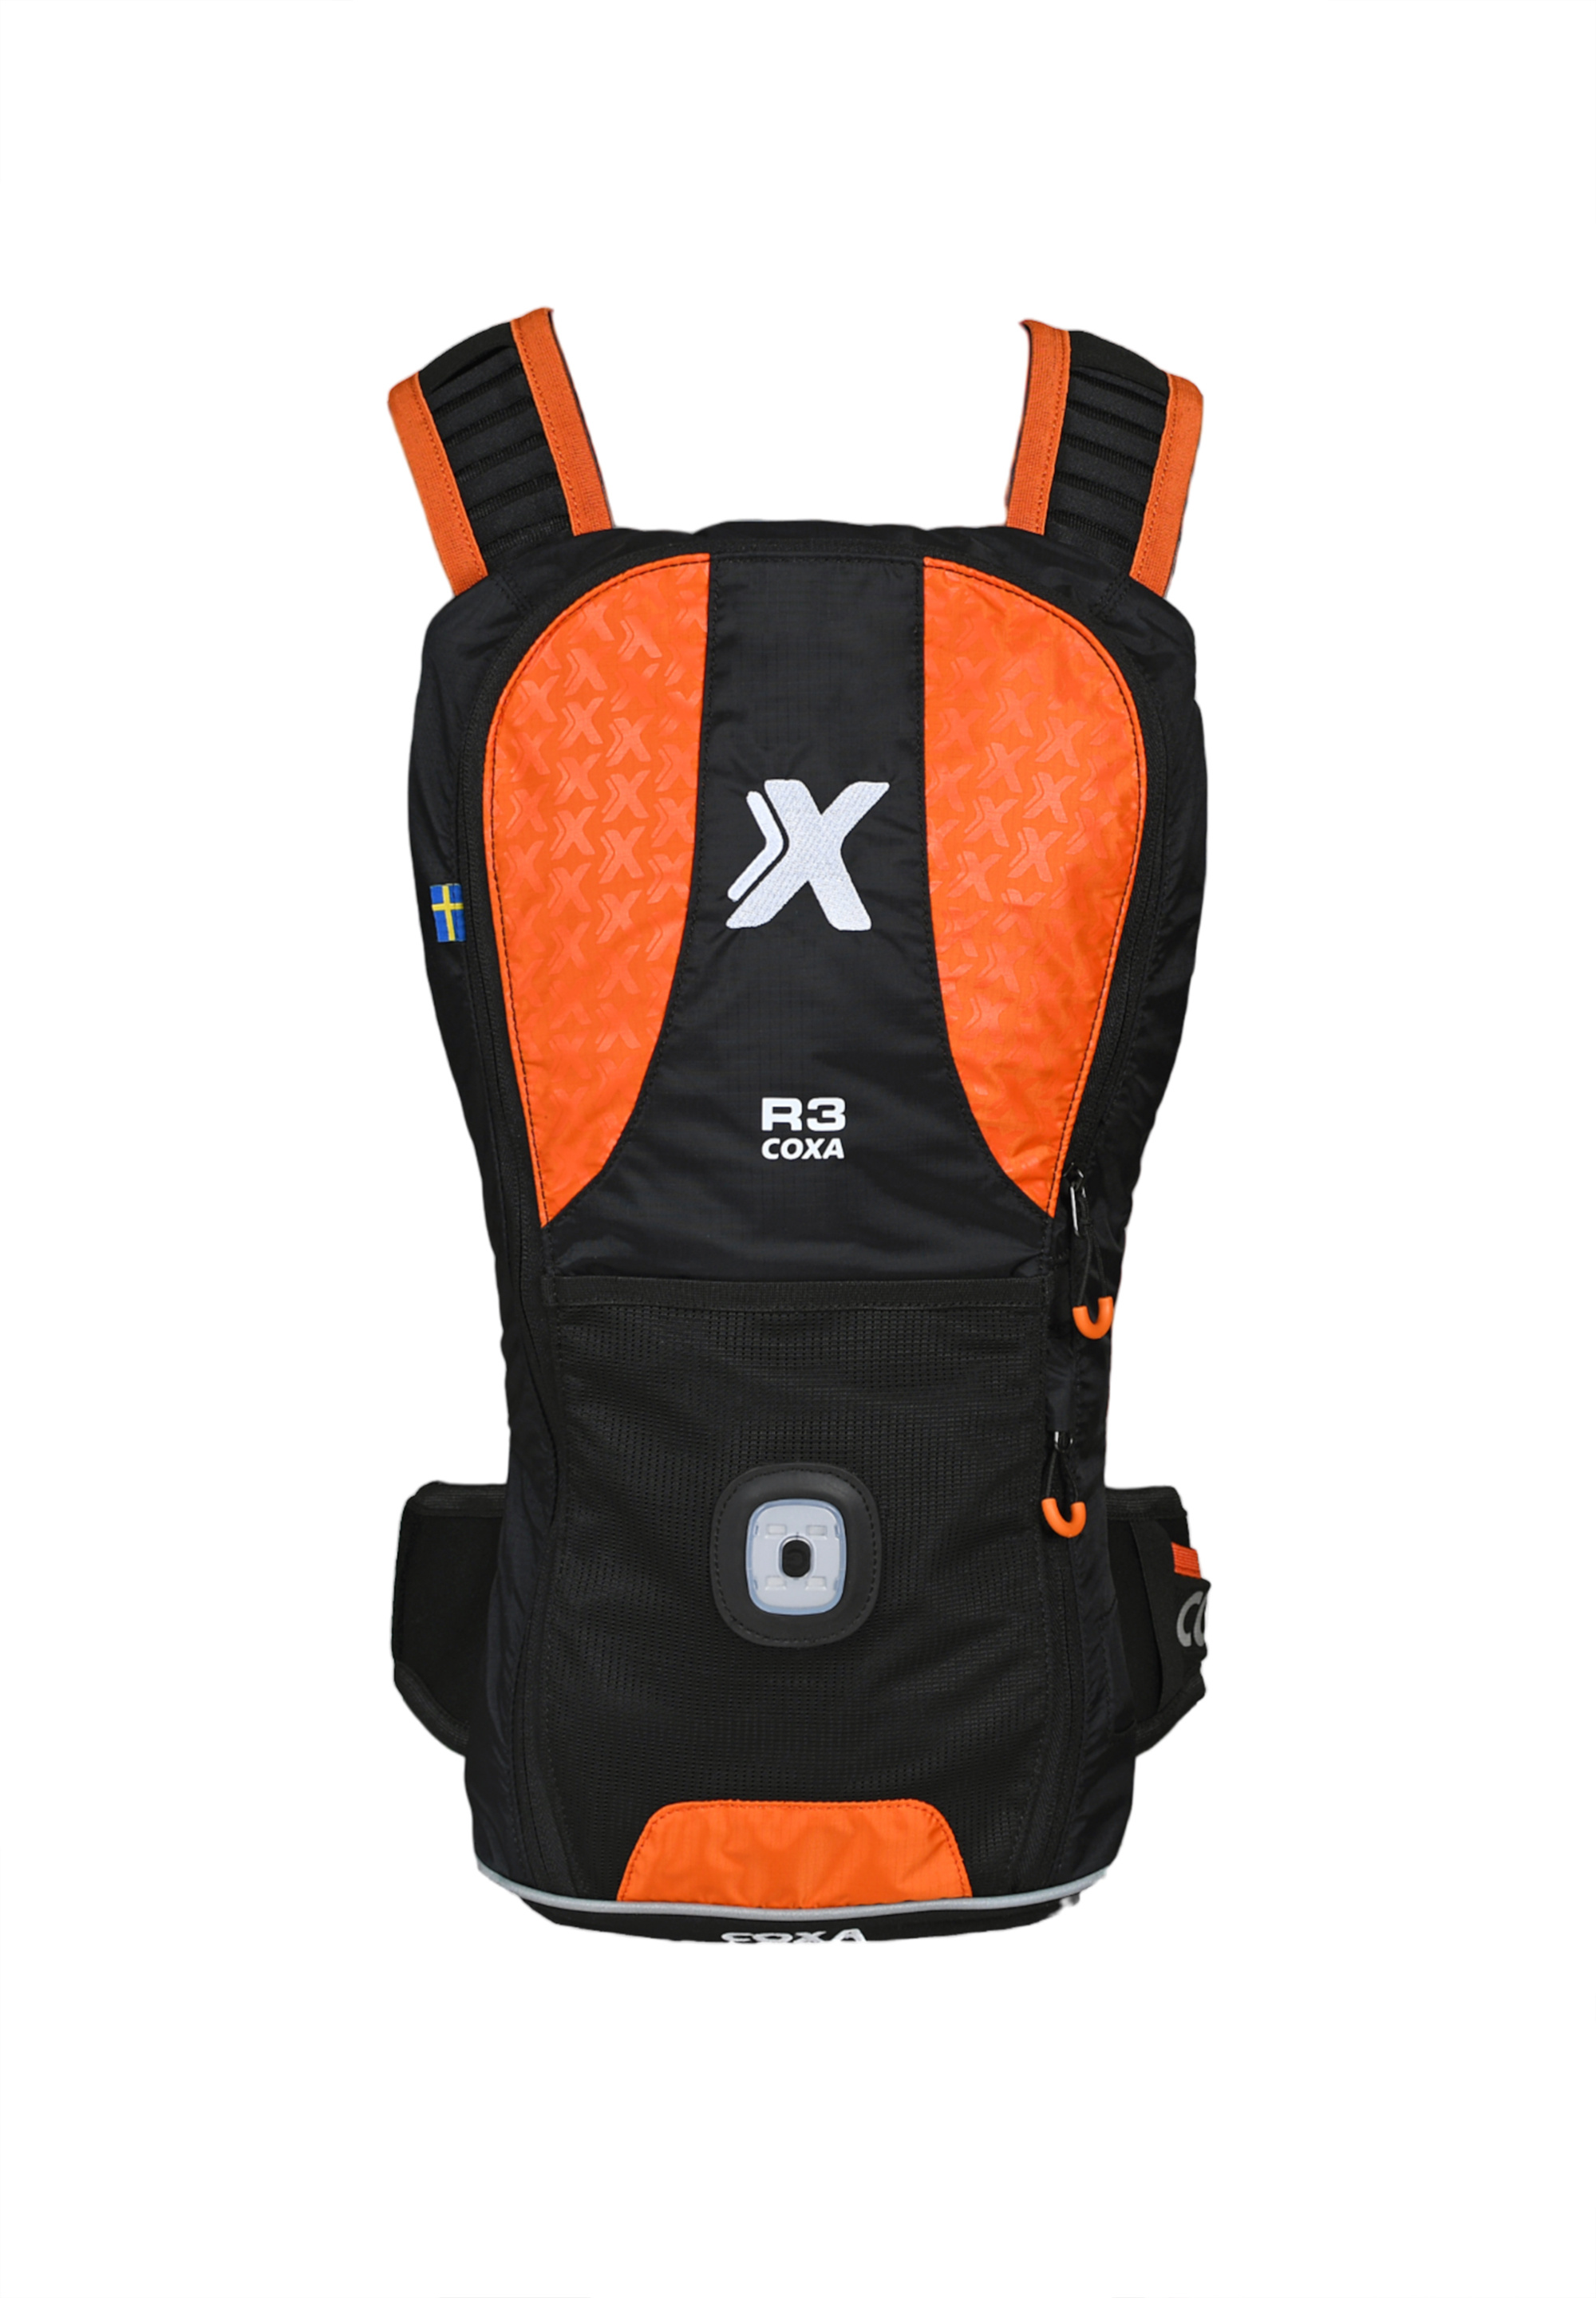 Рюкзак Coxa Carry R3 Orange, оранжевый